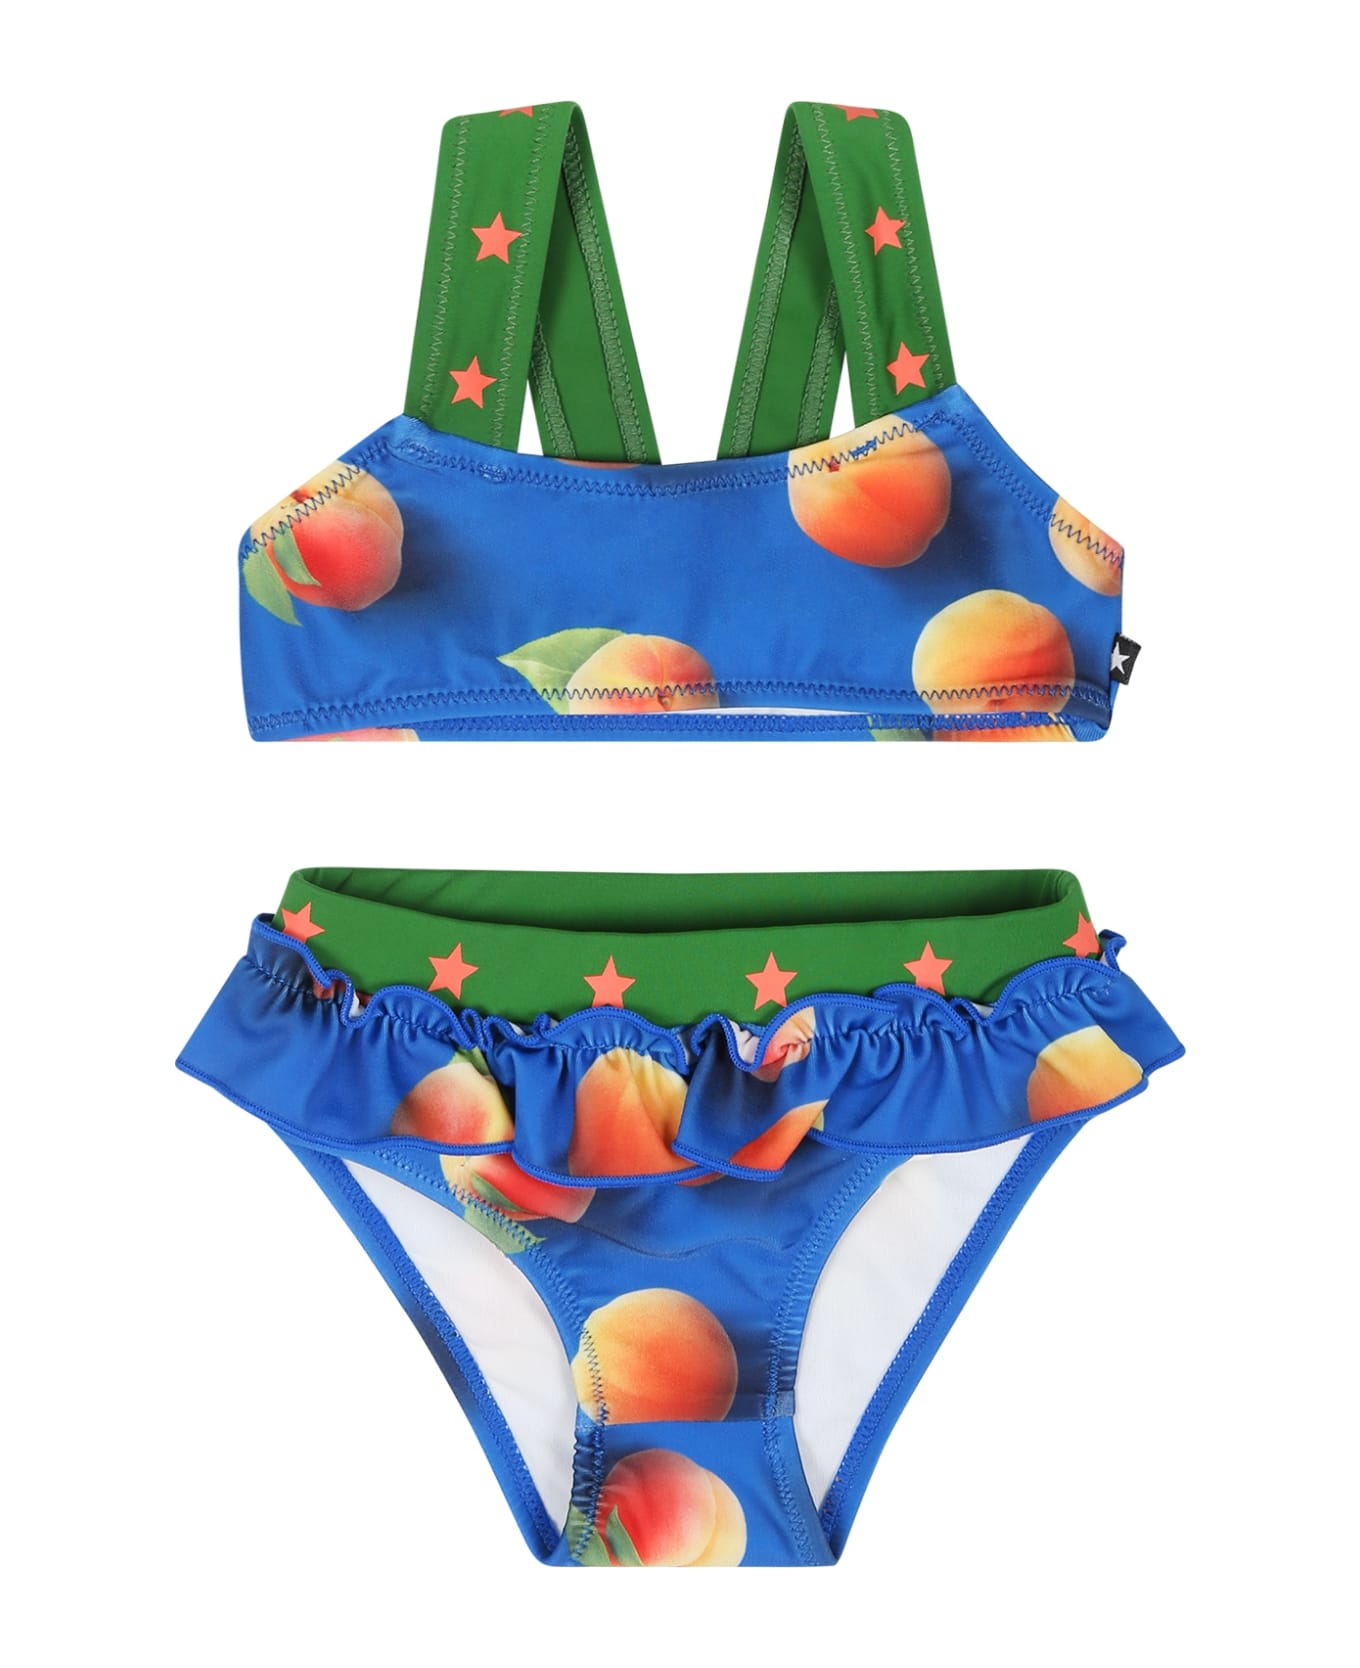 Molo Blue Bikini For Baby Girl With Apricot Print - Blue 水着